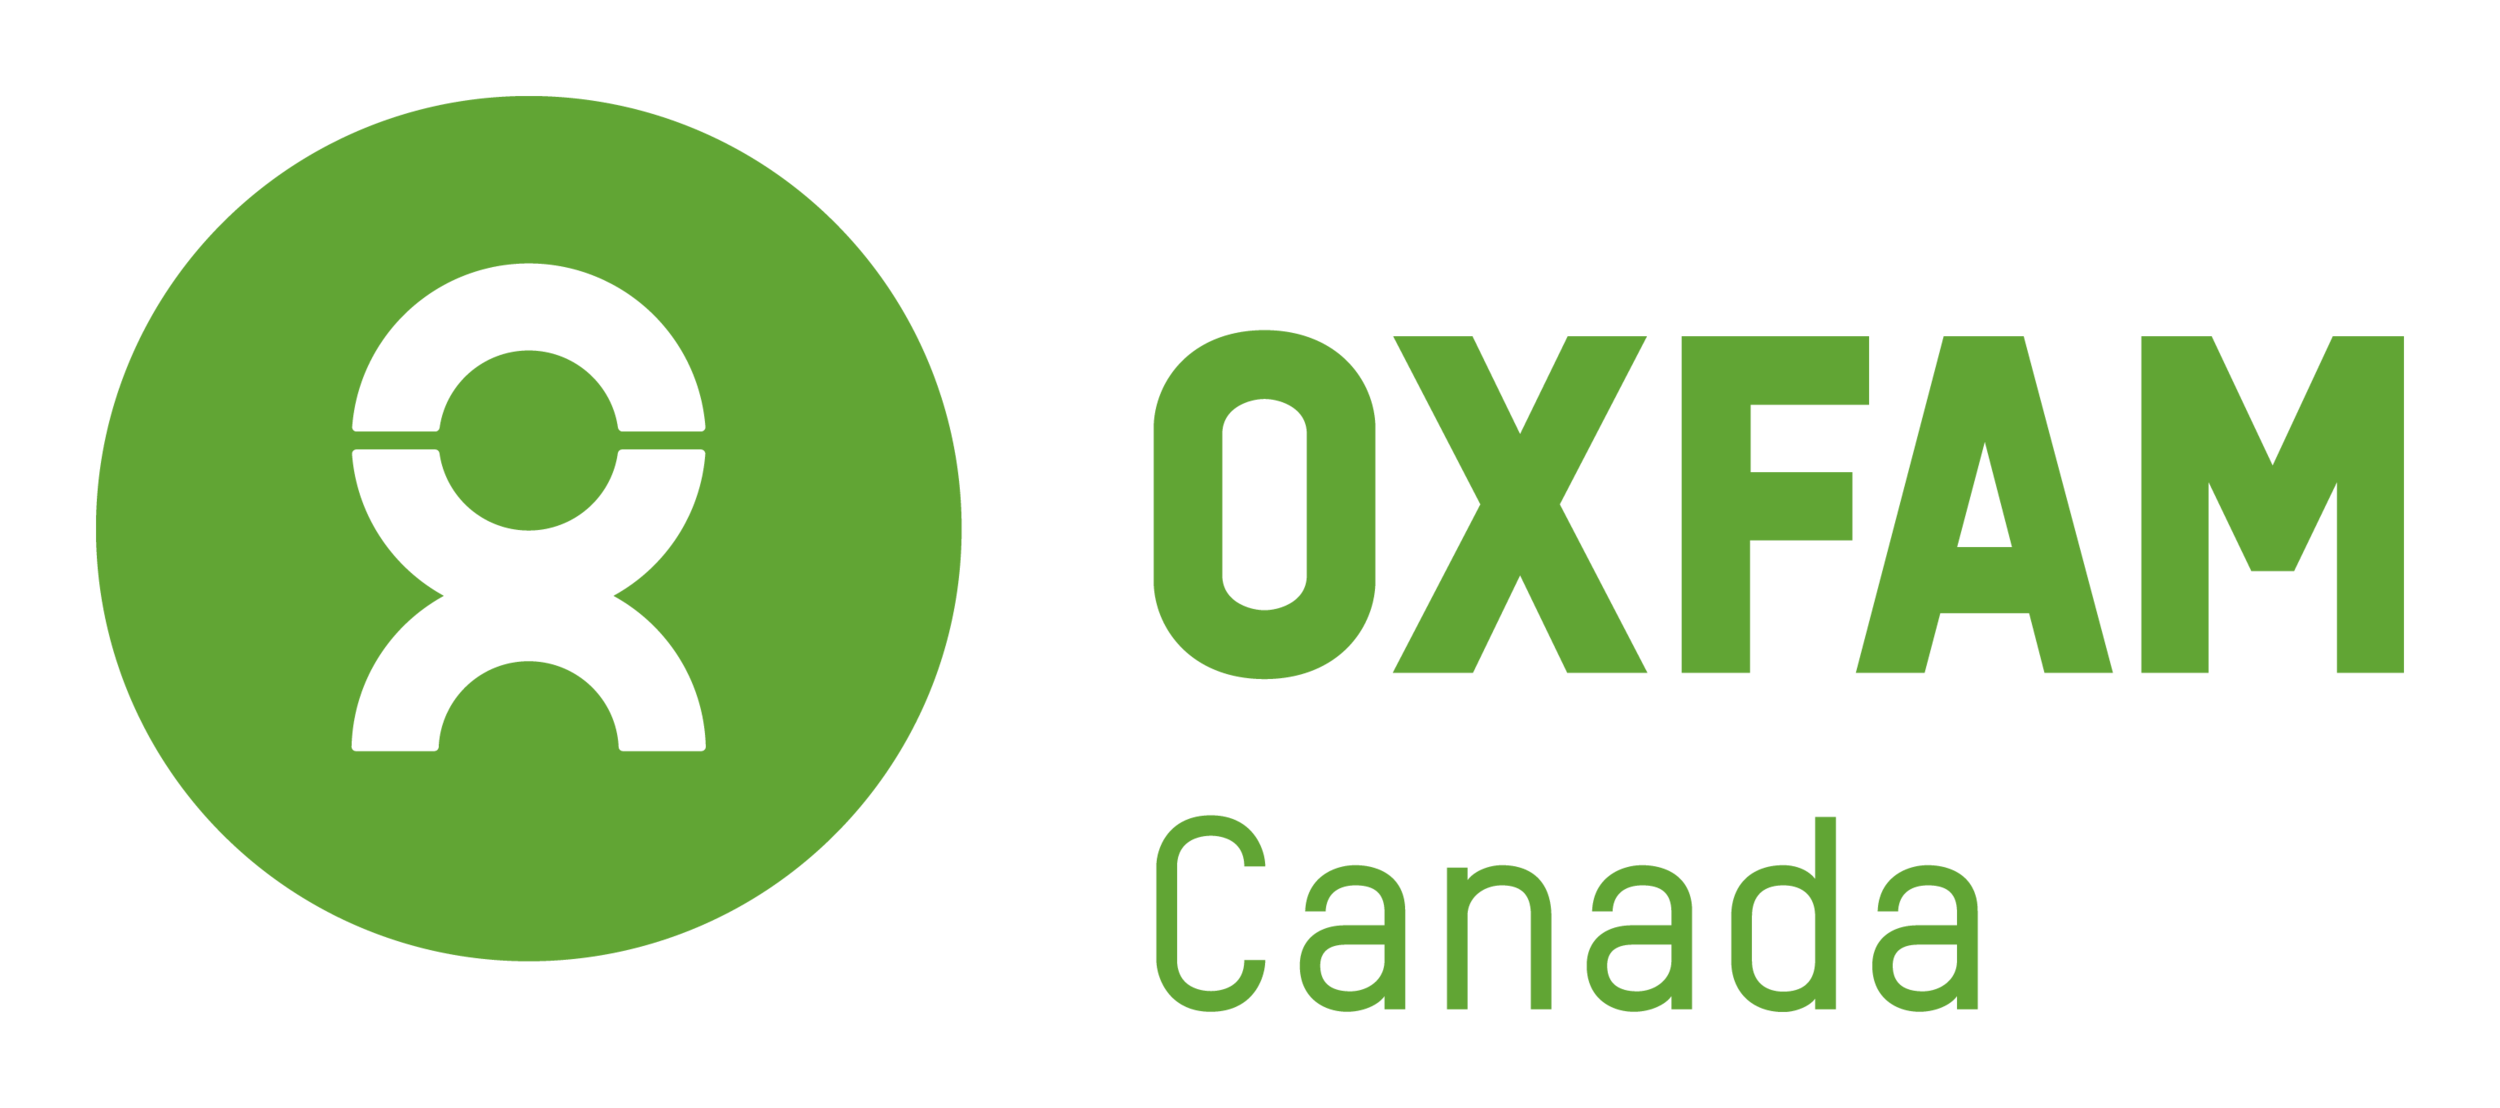 oxfam-canada-logo-lg.png